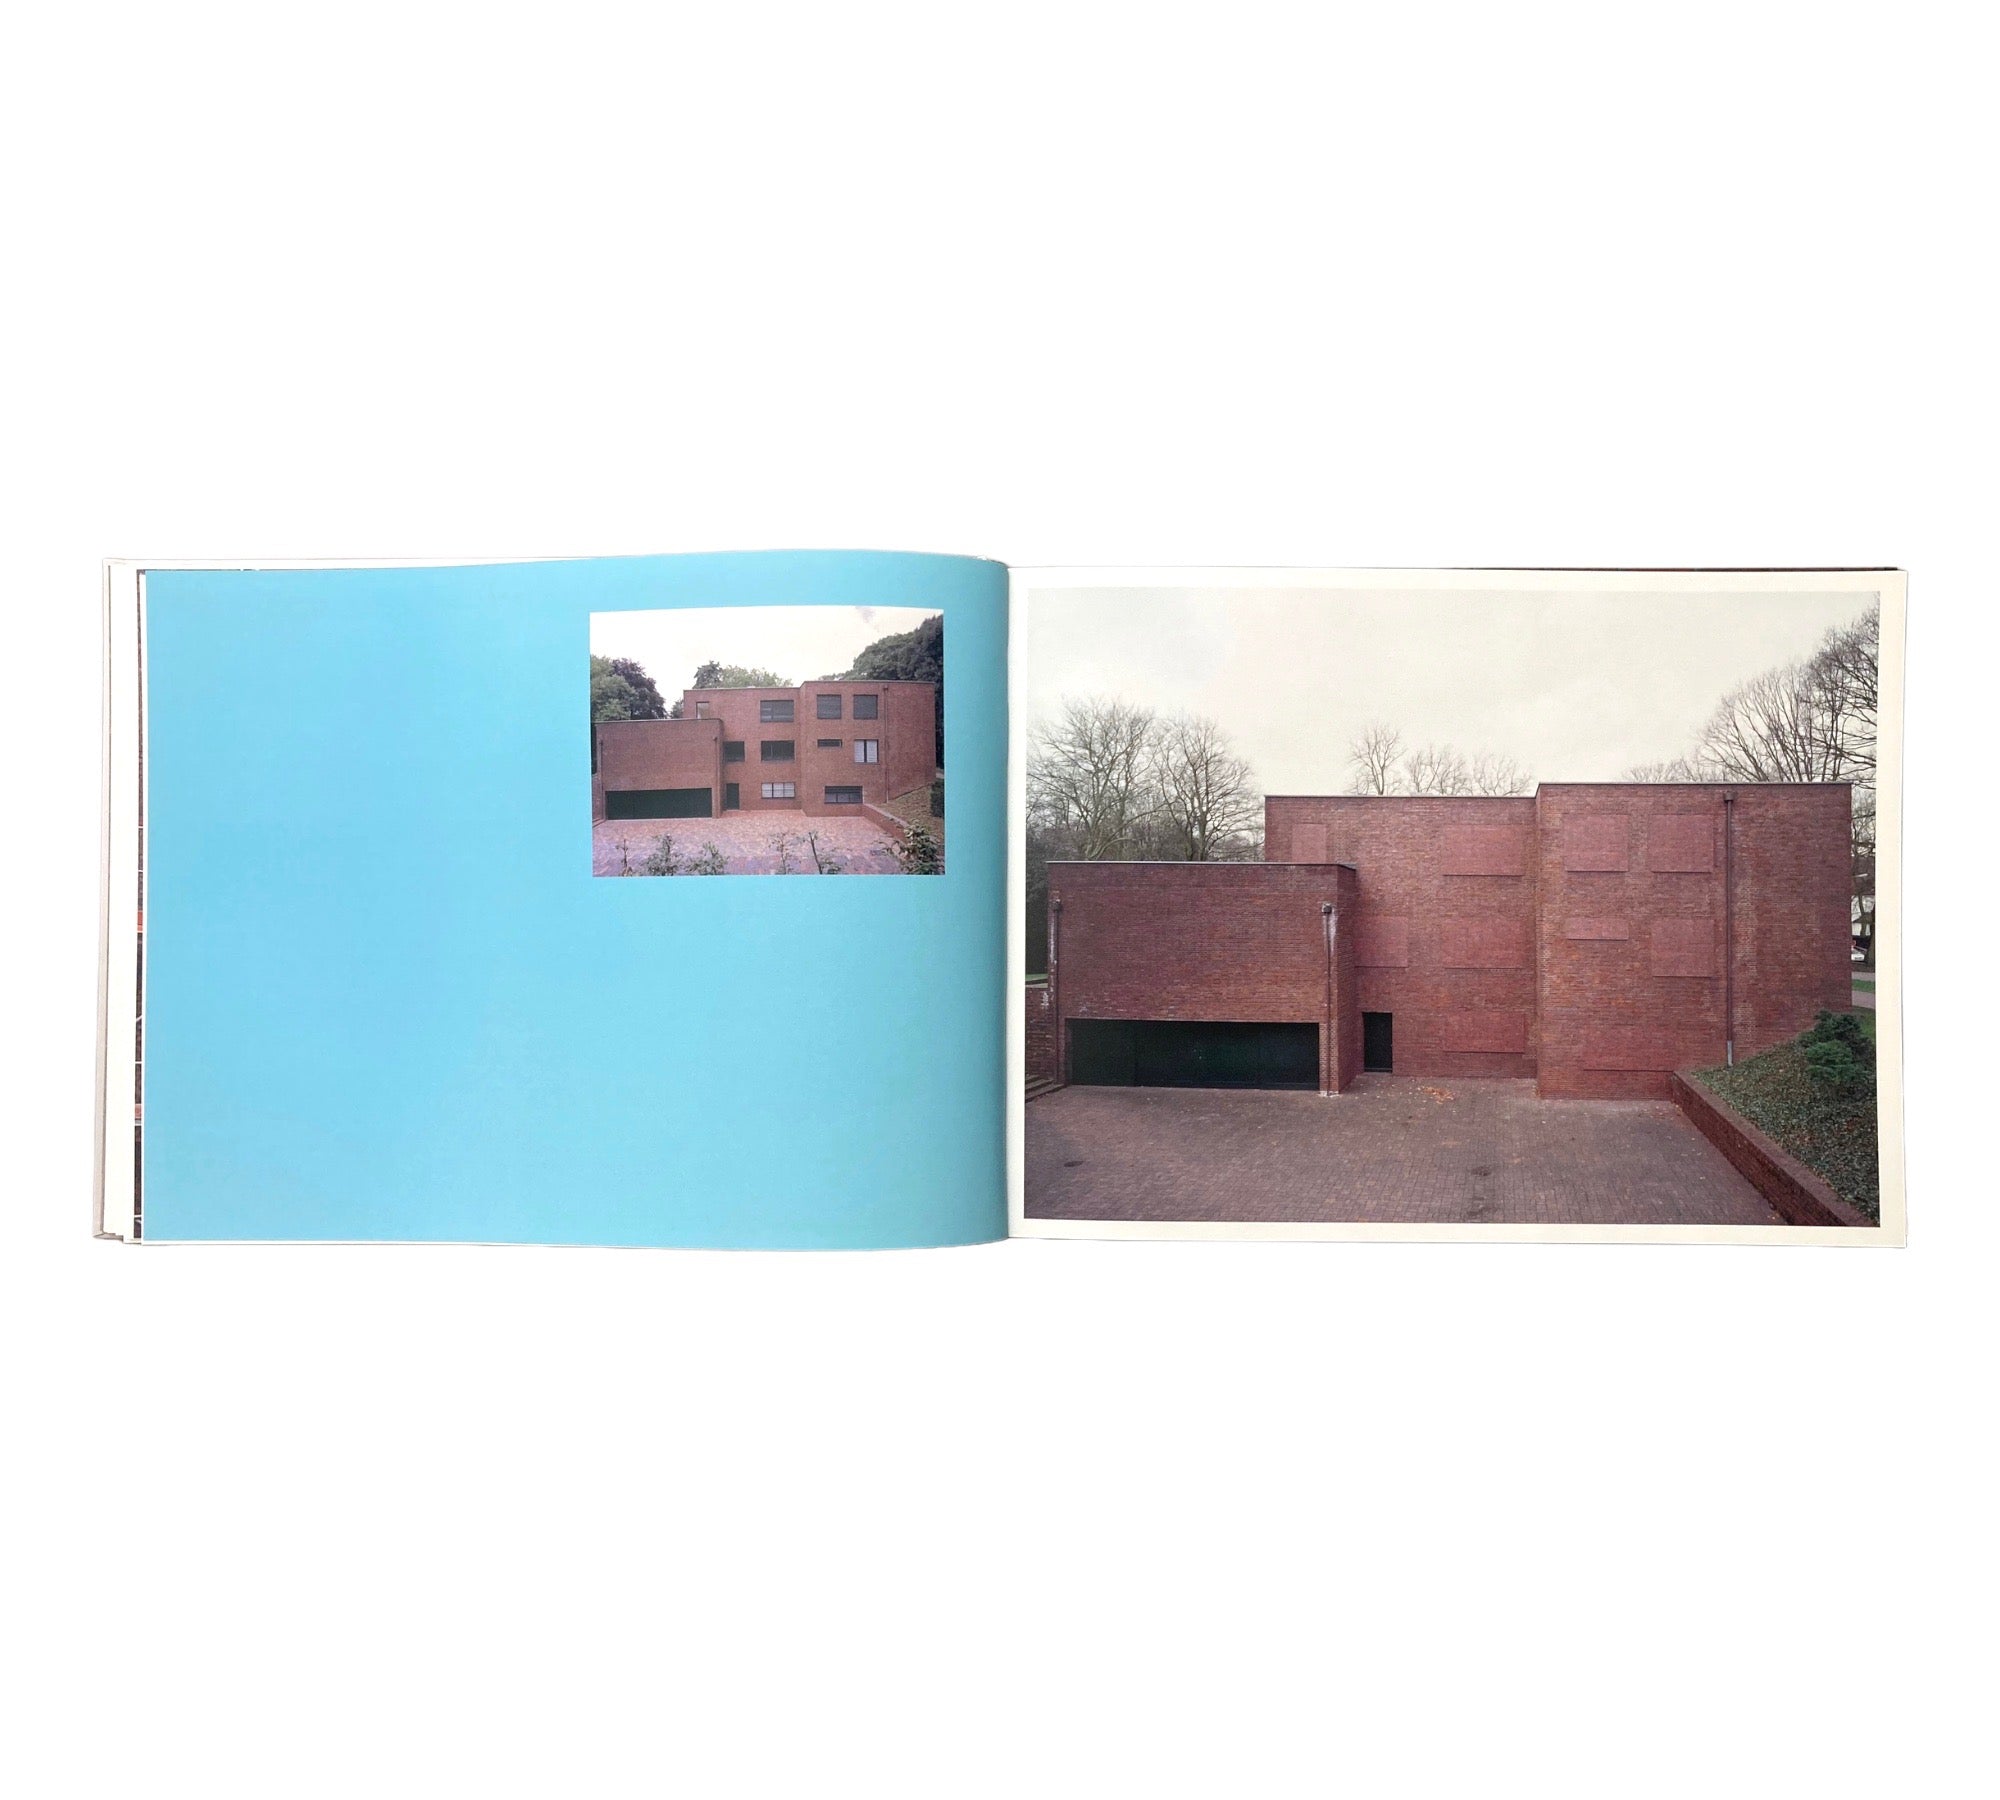 John Baldessari: Brick Bldg, Lg Windows W/xlent Views, Partially Furnished, Renowned Architect - (Non-mint)